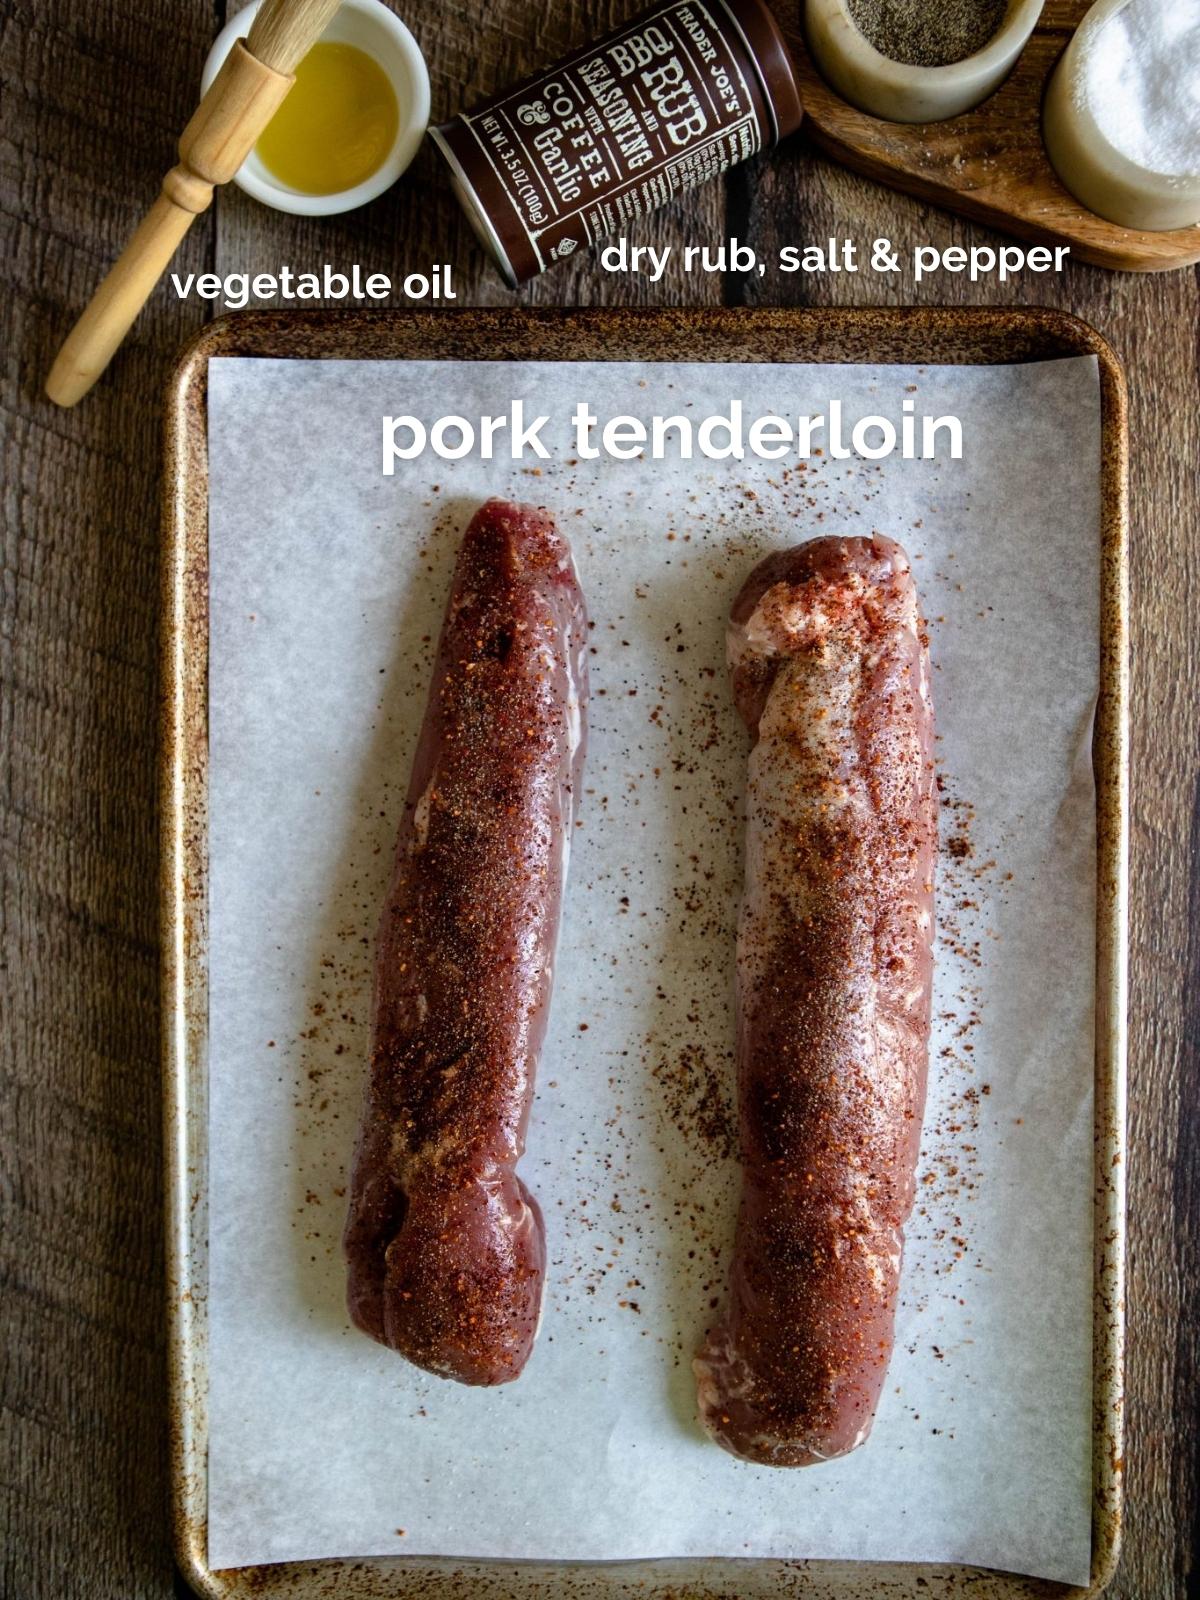 bbq pork tenderloin ingredients 